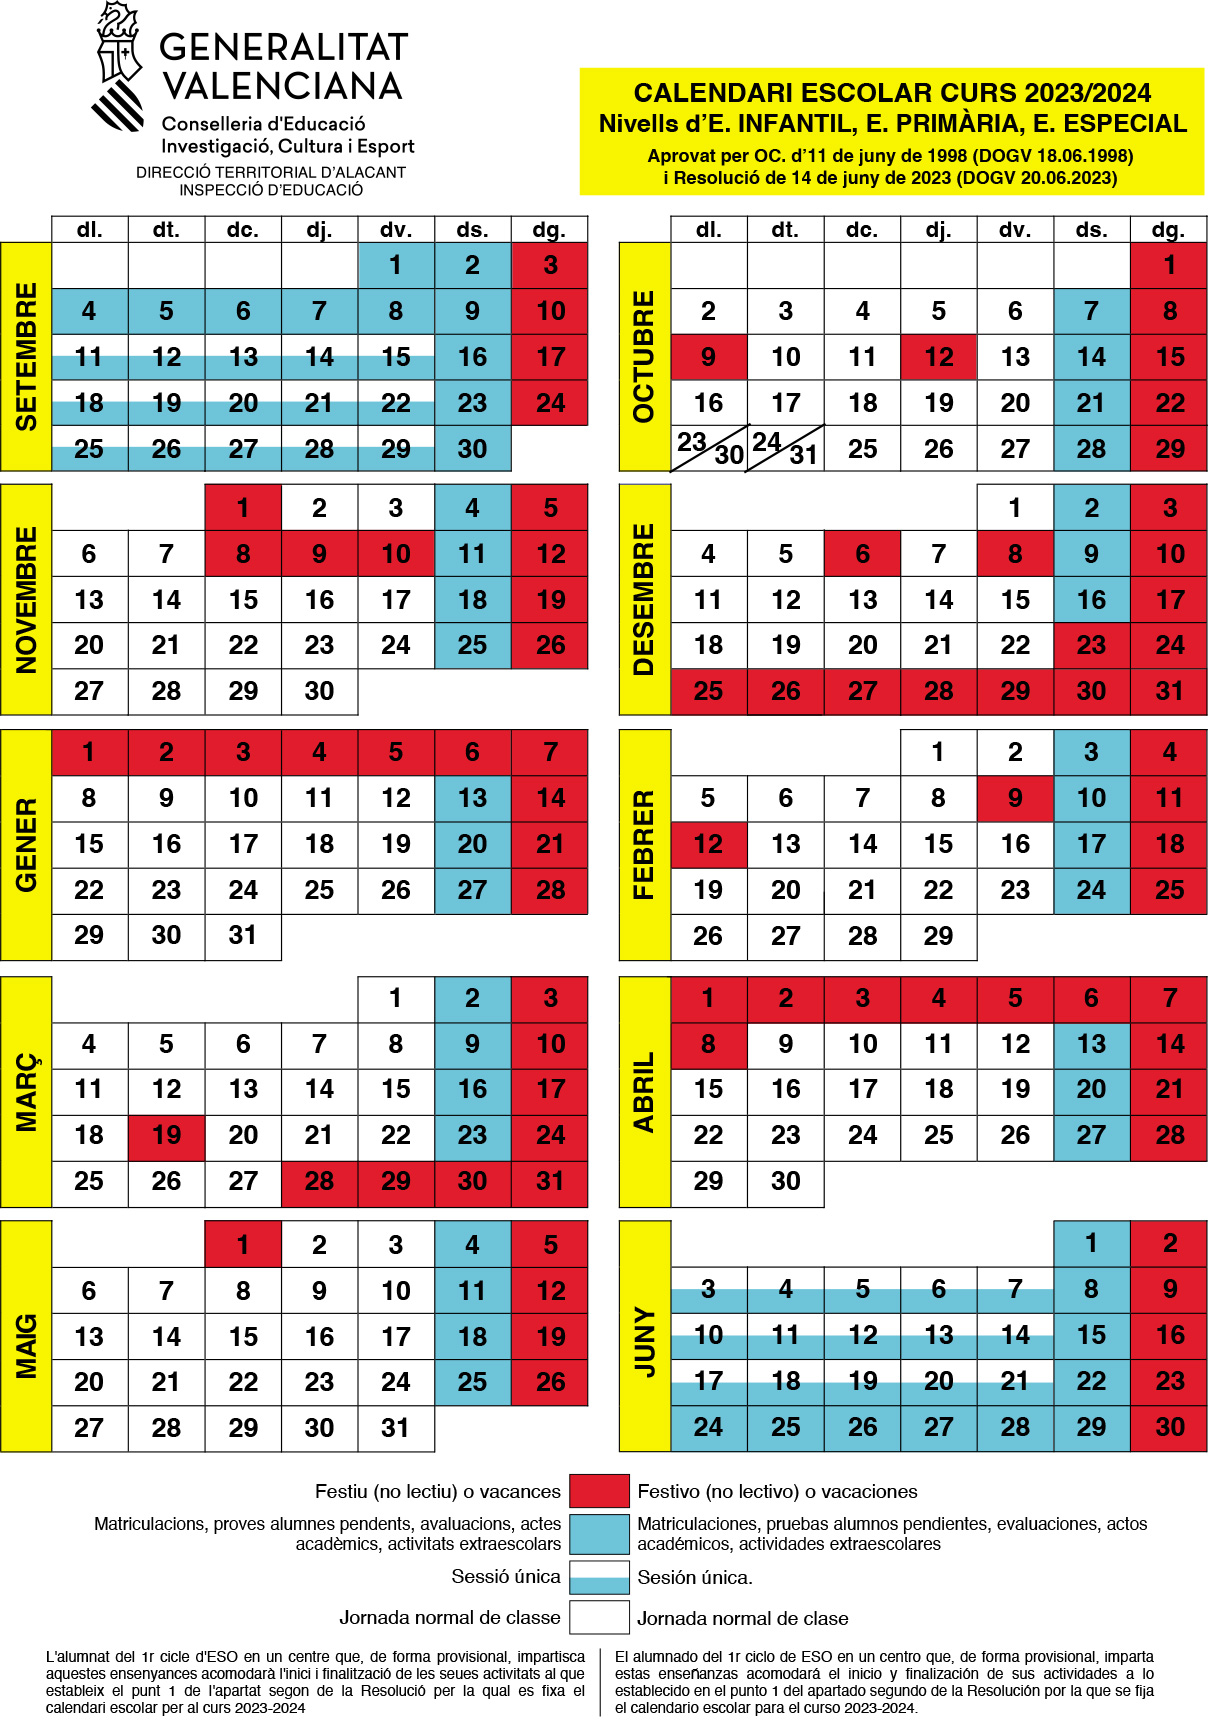 CalendarioEscolar-23-24-Low